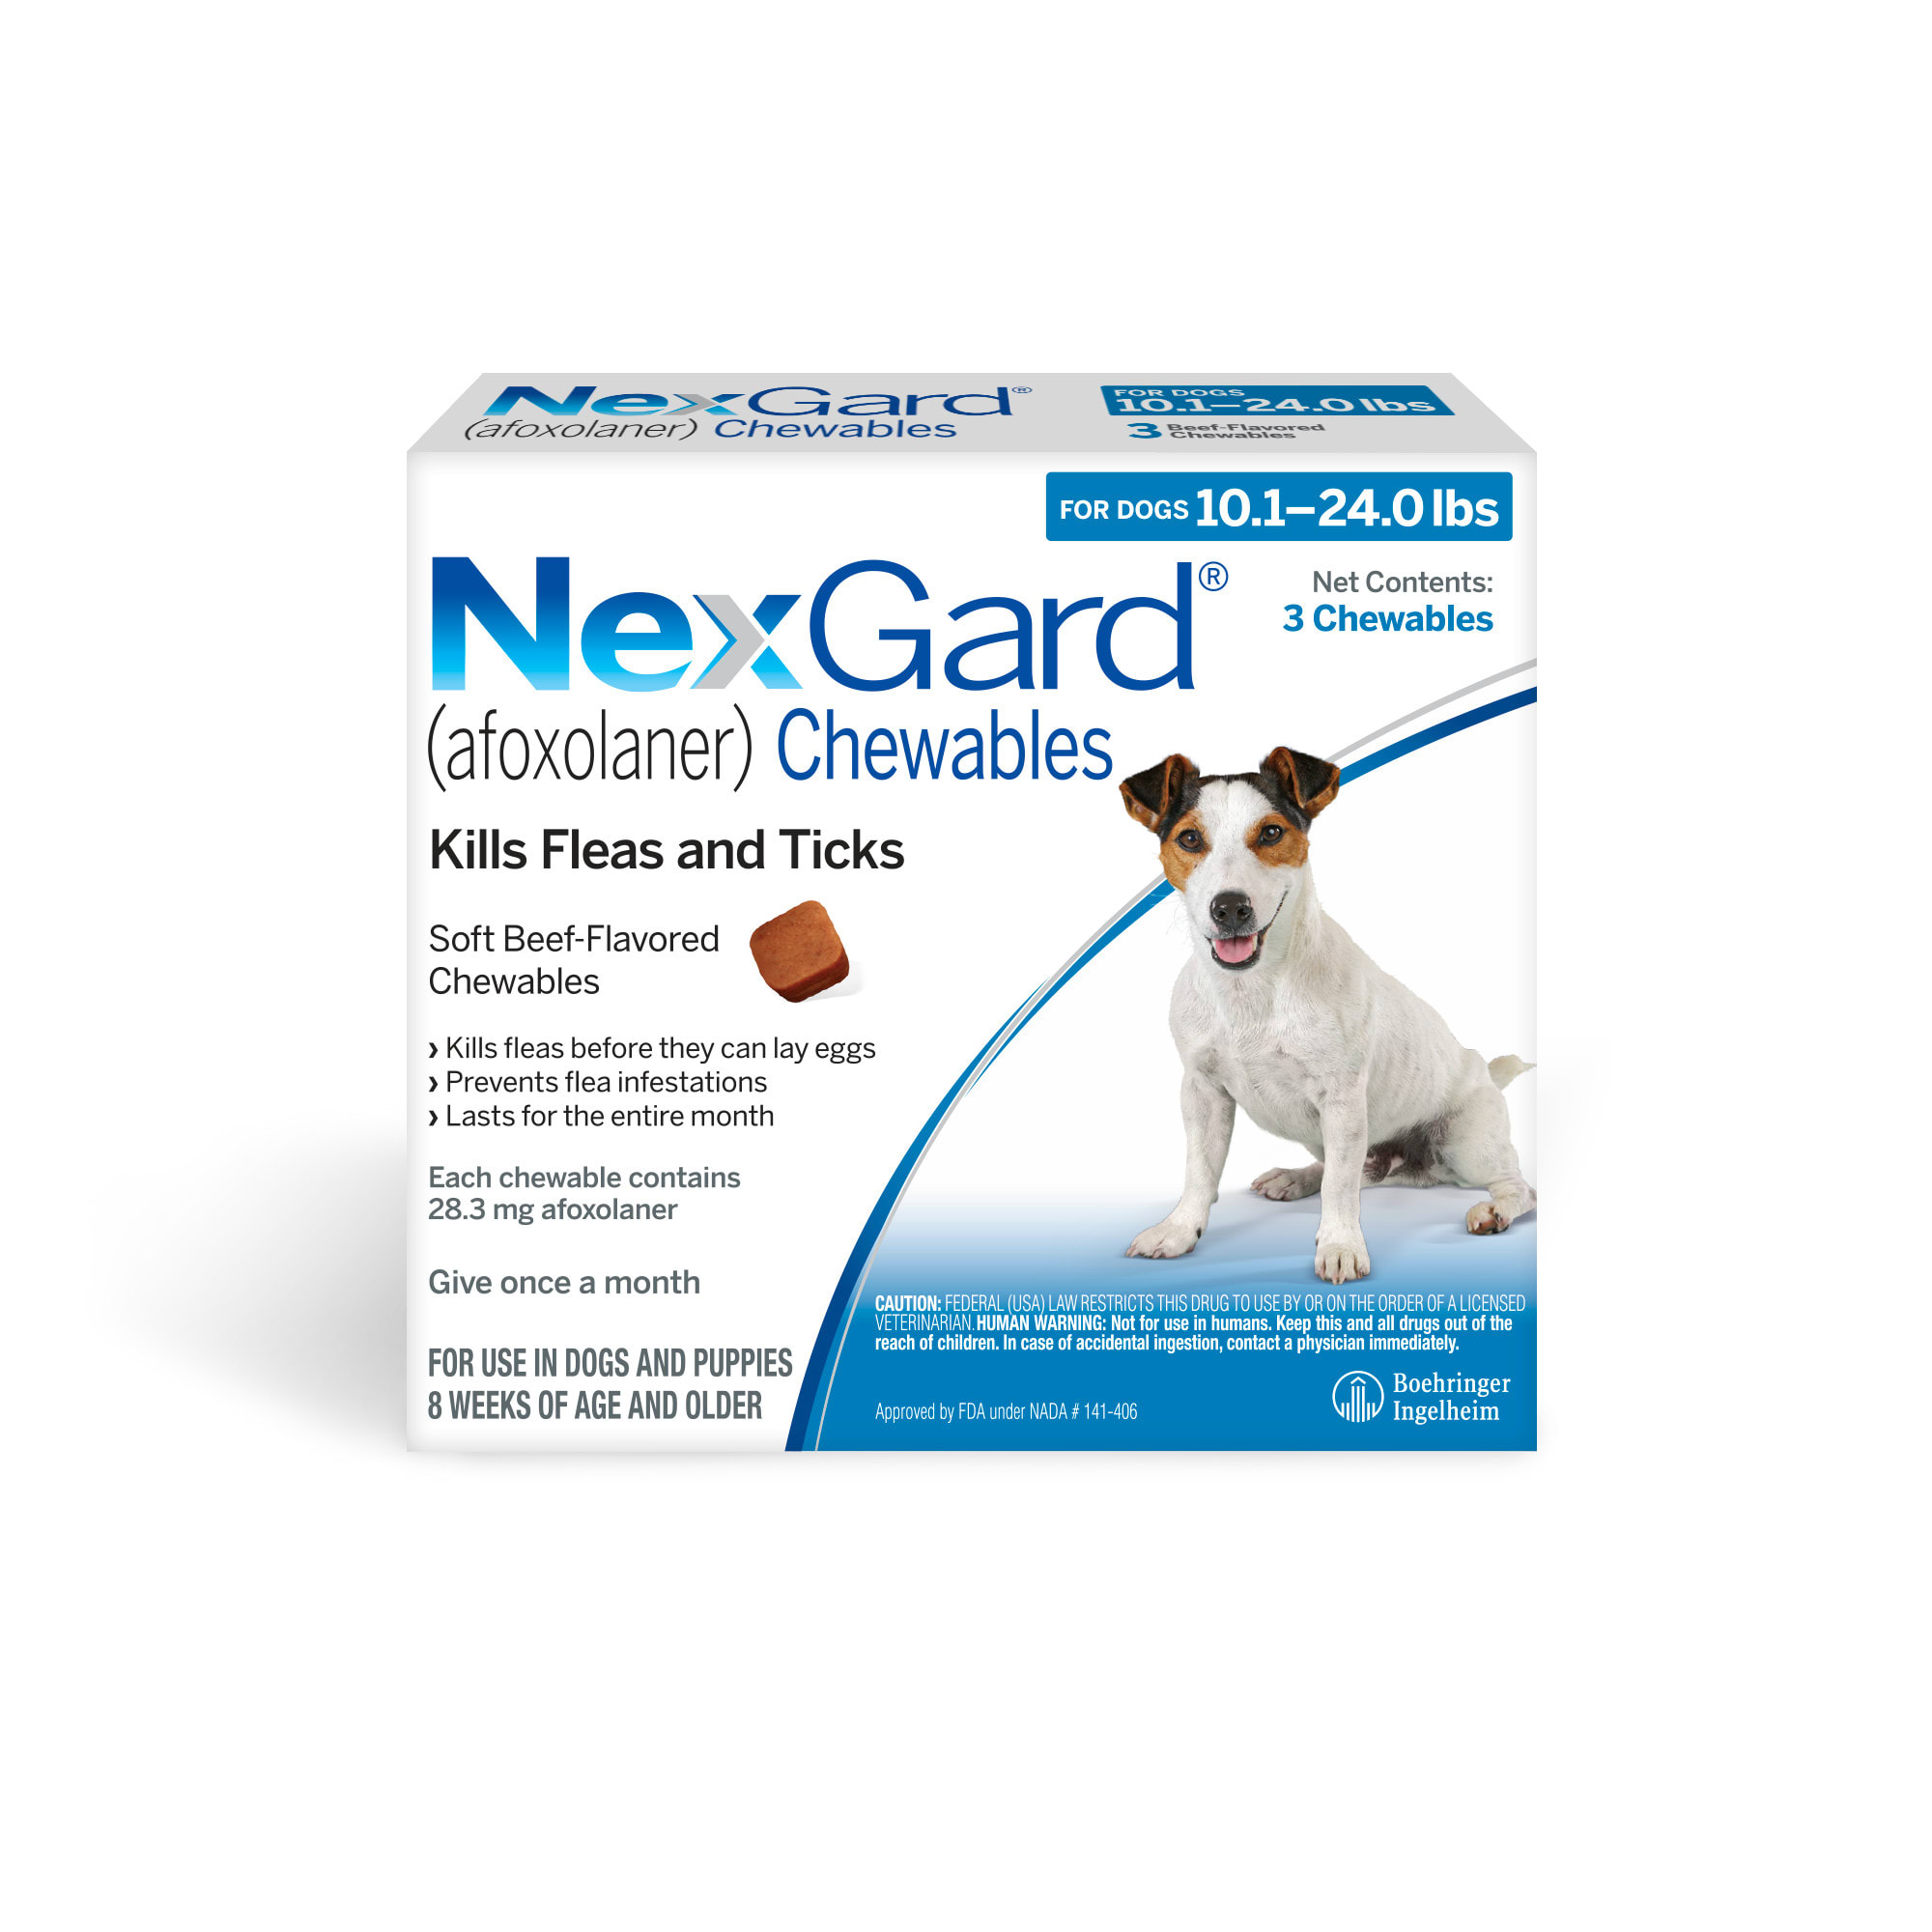 nexgard-afoxolaner-outlet-discount-save-54-jlcatj-gob-mx